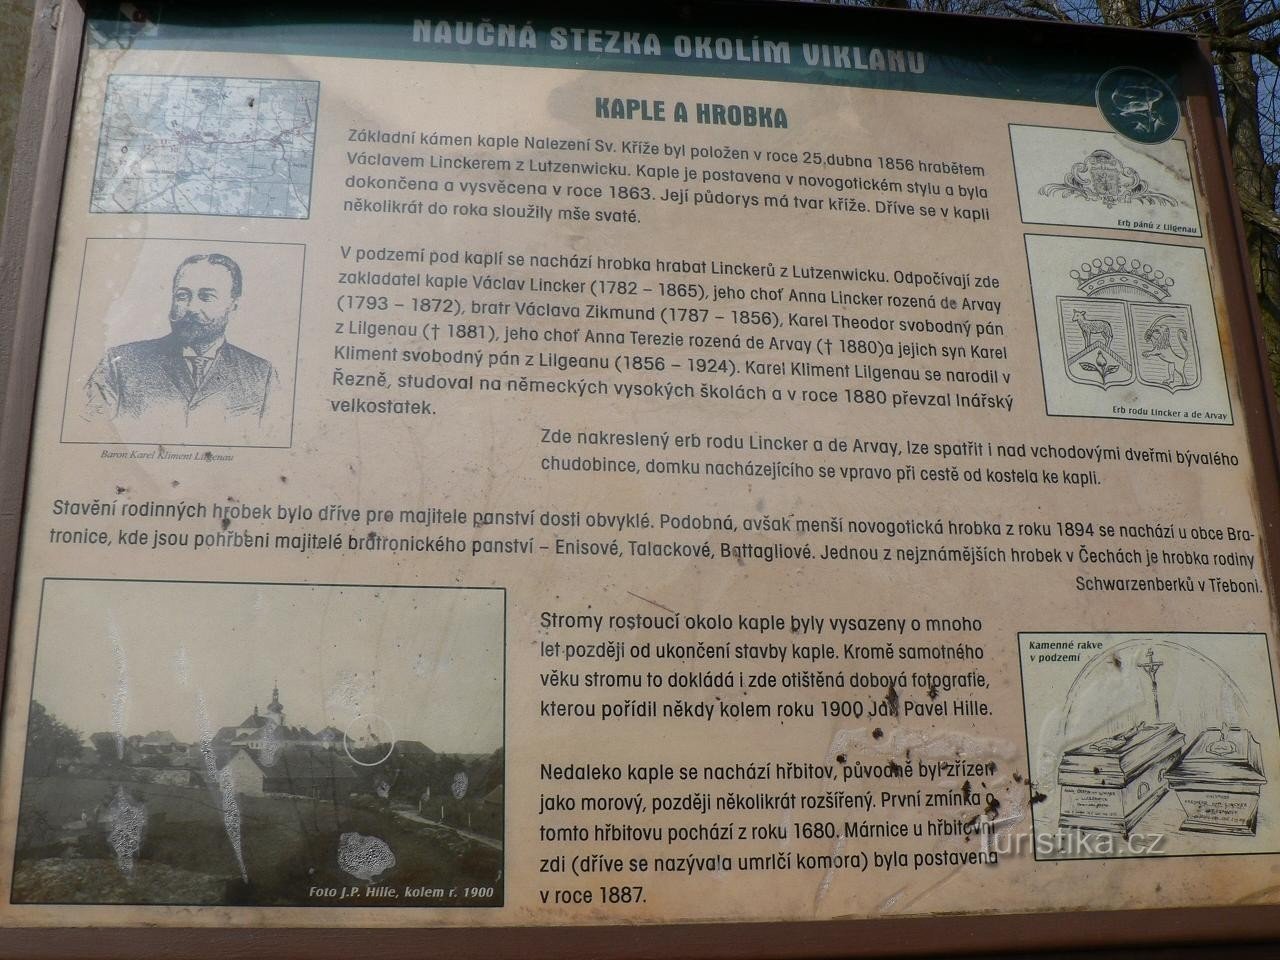 Kadov, panneau d'information près de la tombe